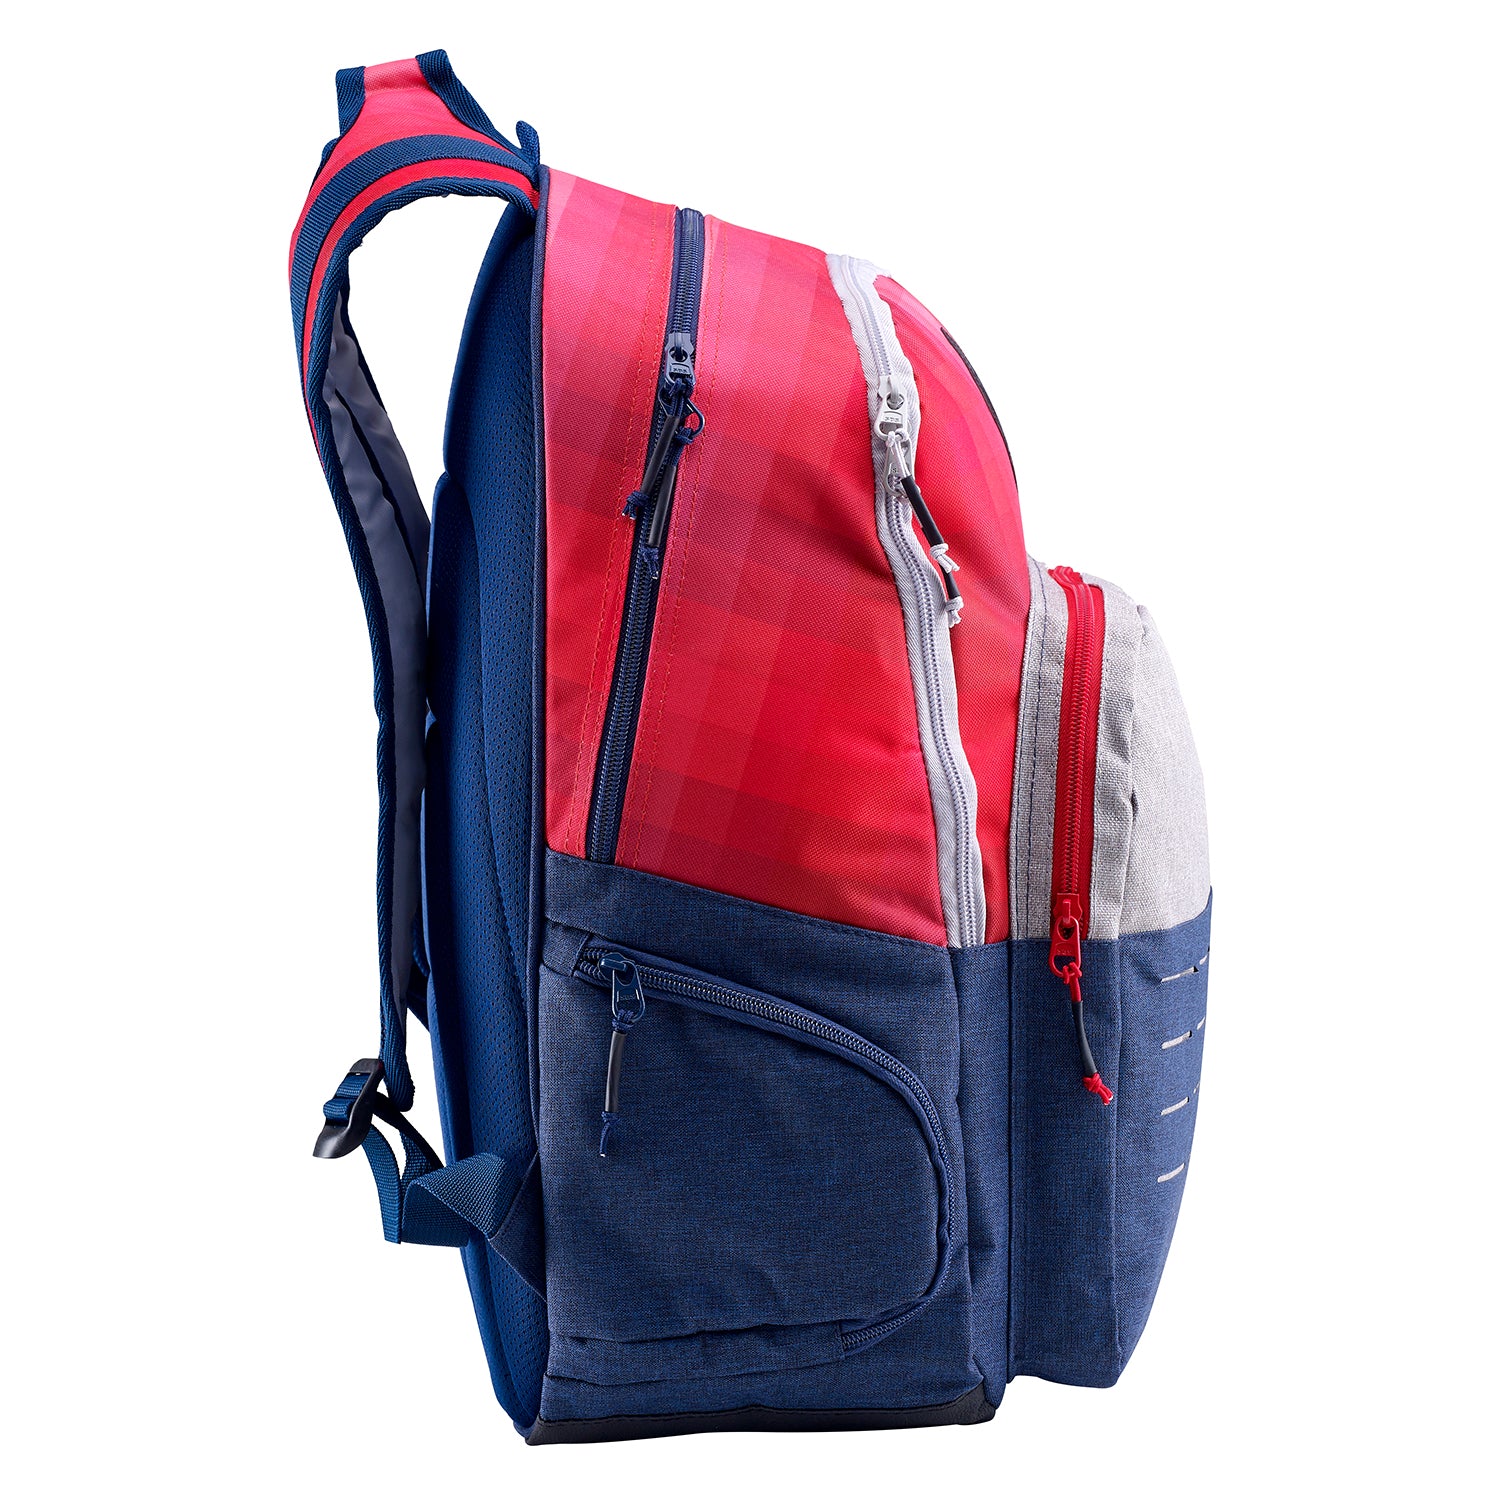 Caribee Bombora backpack Red Plaid side pocket